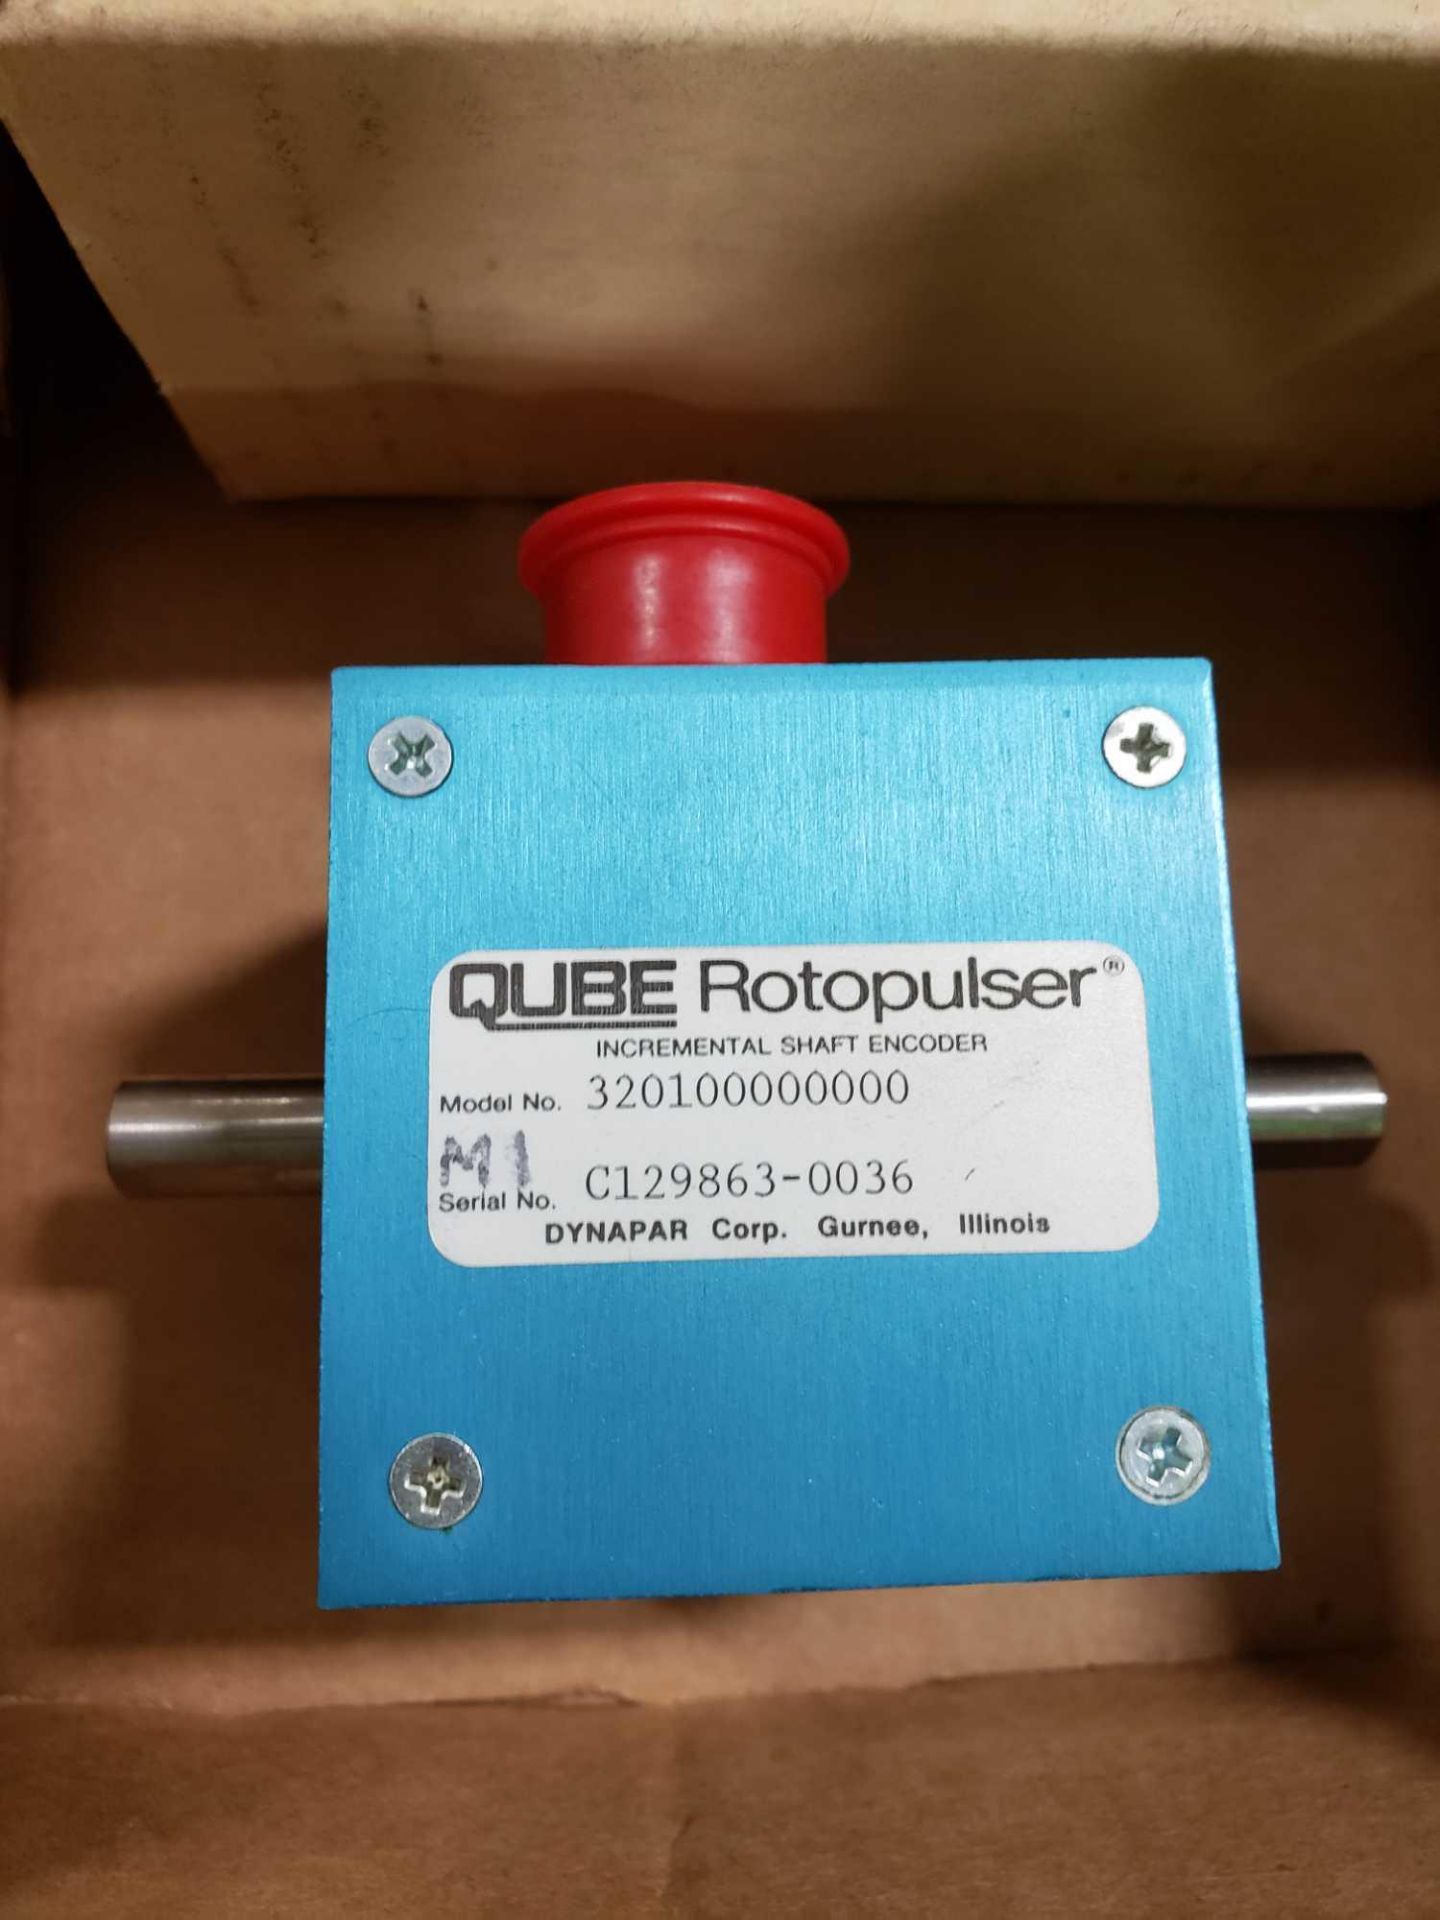 Dynapar Qube Rotopulser model 320100000000 incremental shaft encoder. New in box. - Image 3 of 3